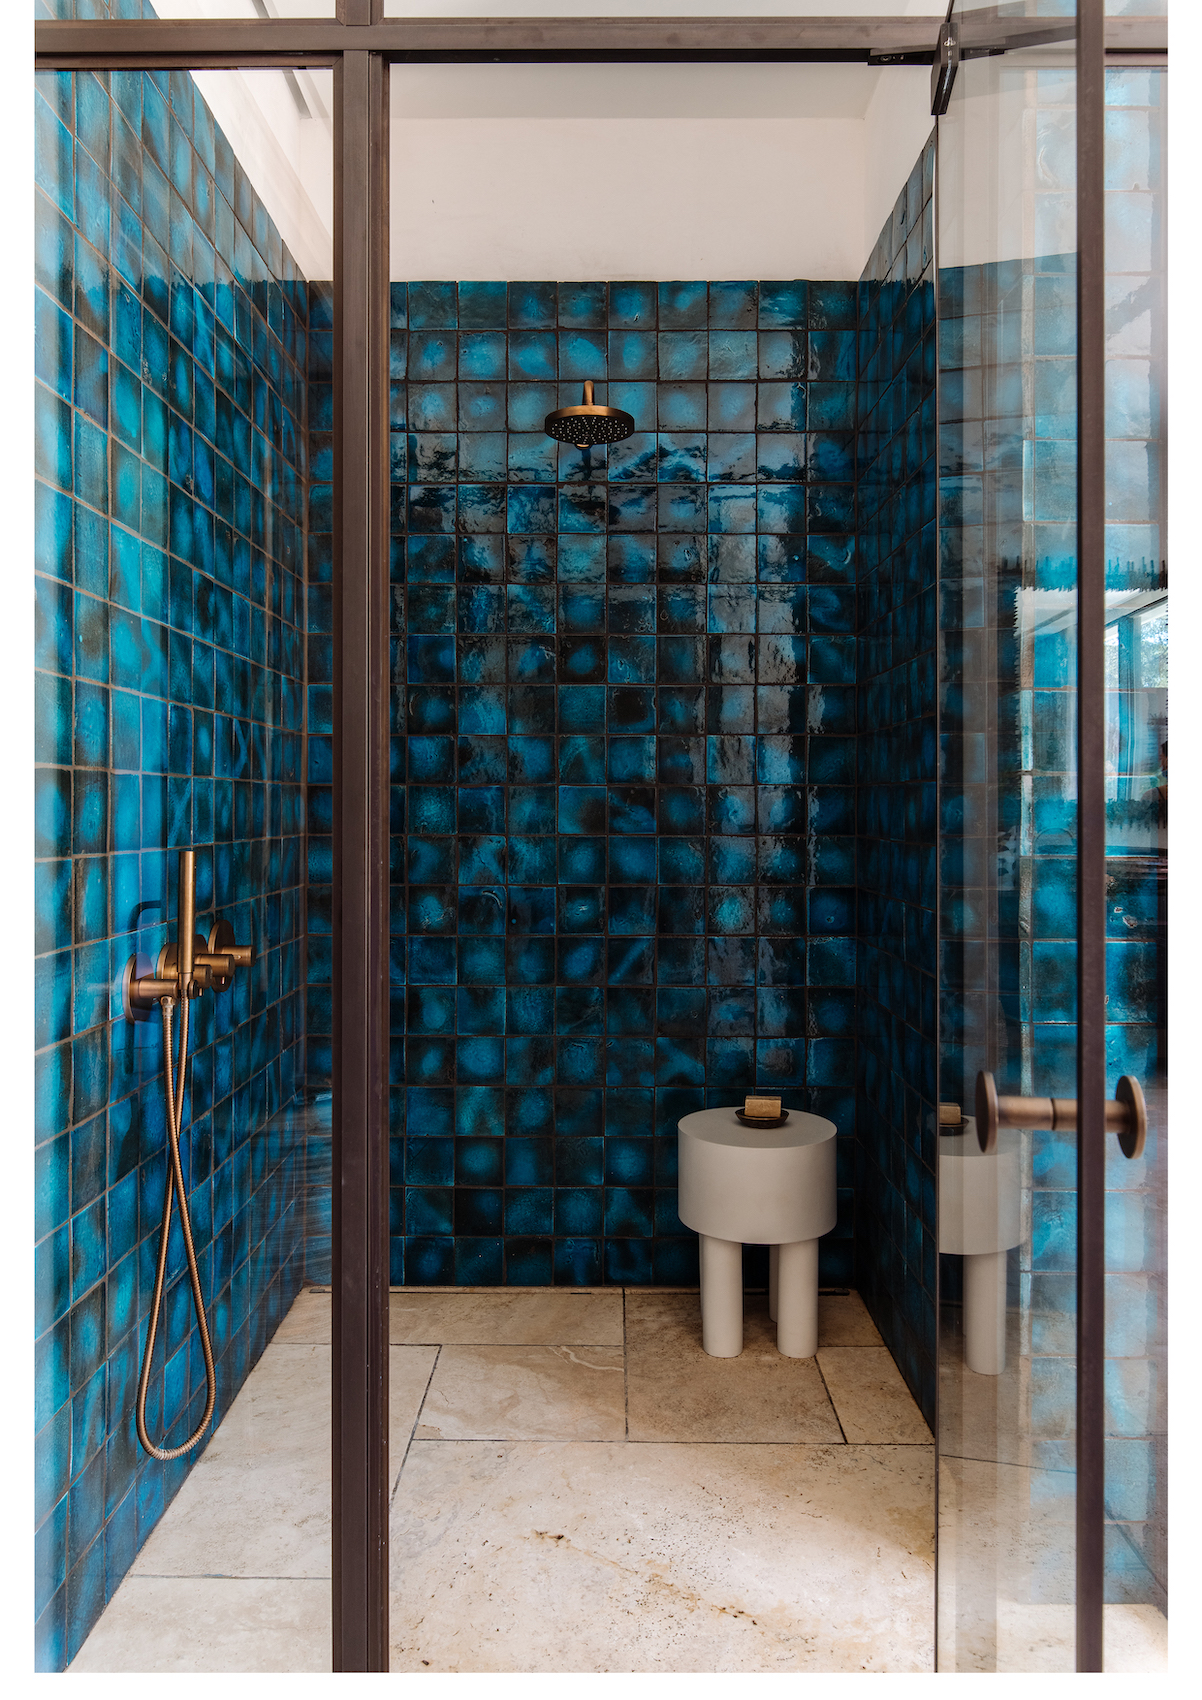 Blue Italian tiled bathroom by interior designer Natalia Miyar in Effect Magazine